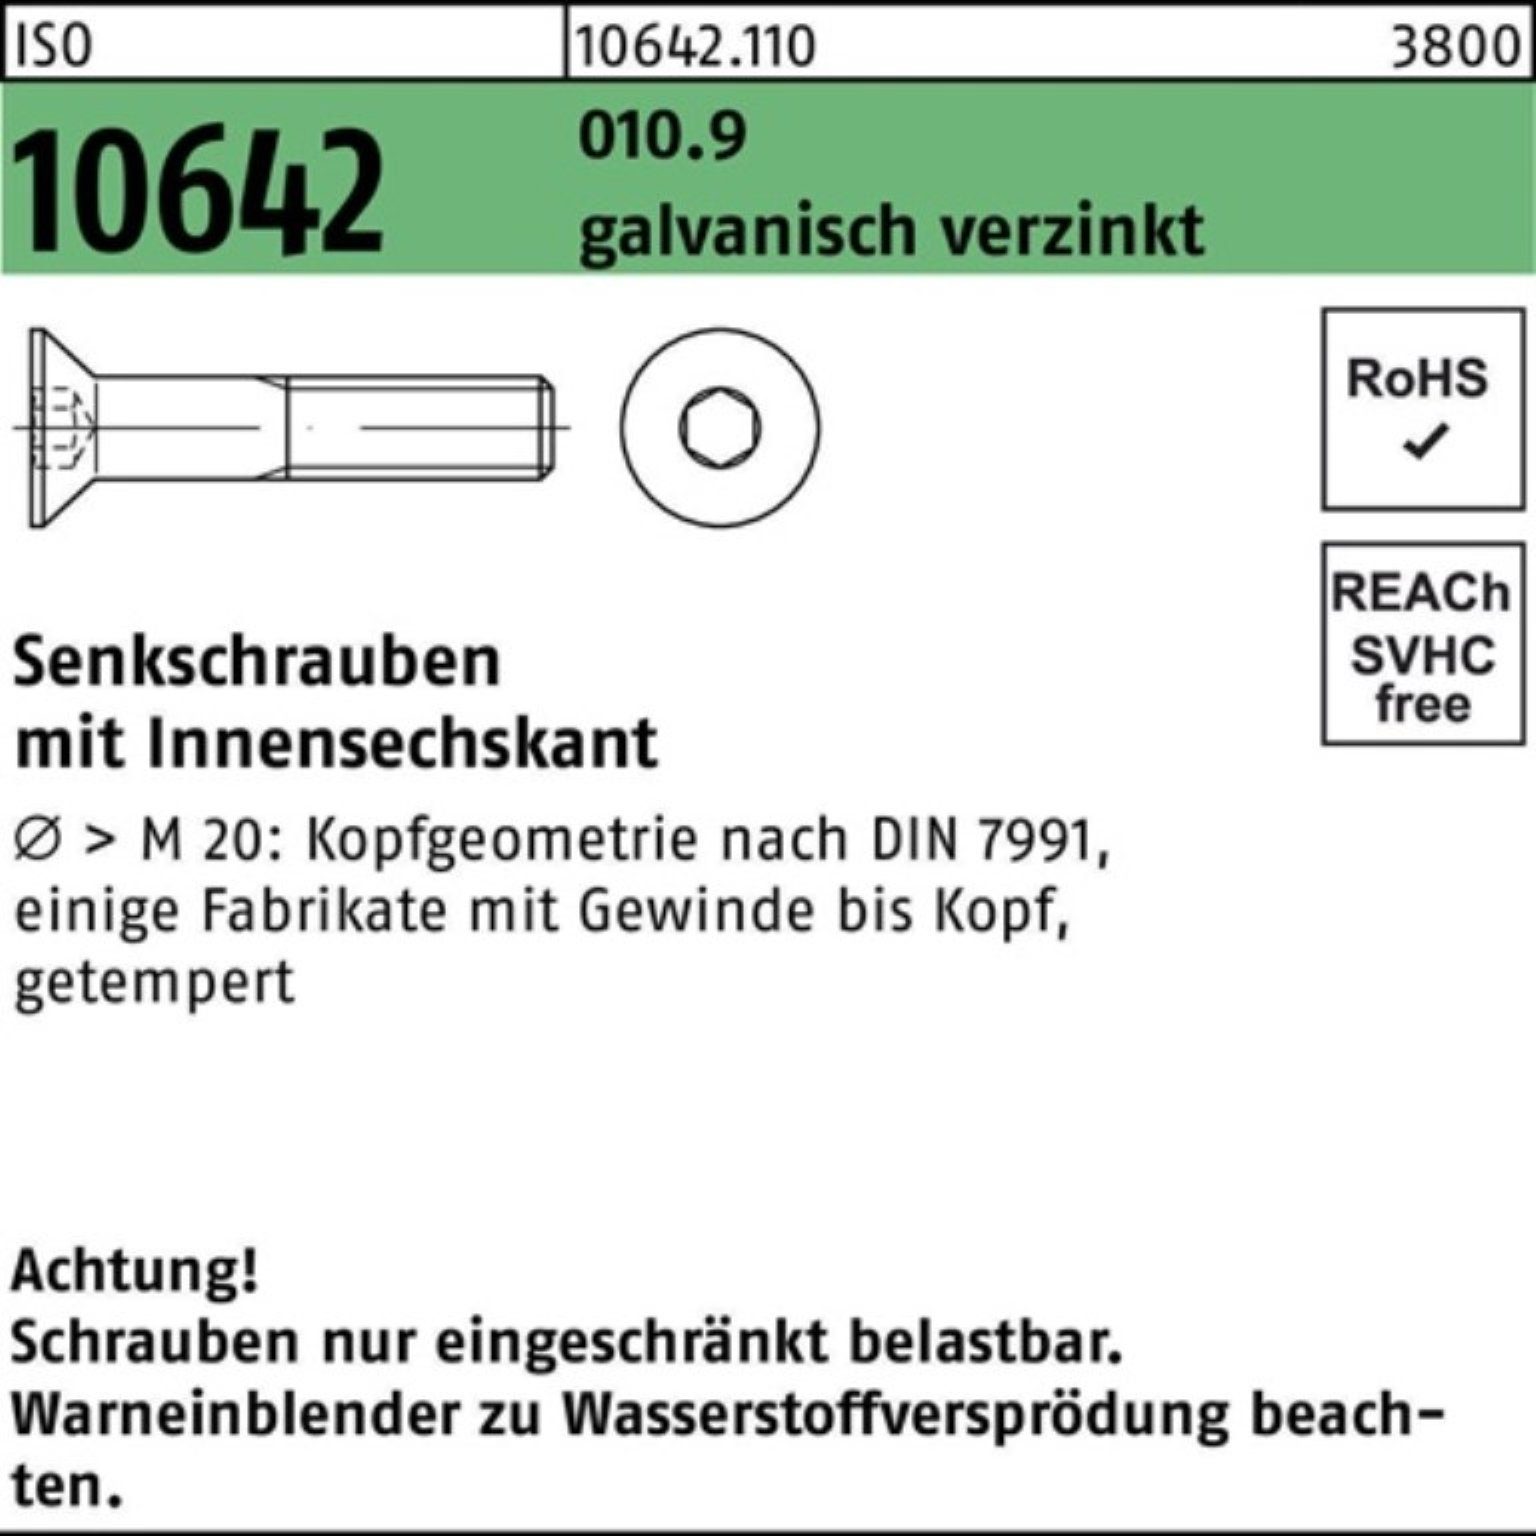 Reyher Senkschraube 200er Pack Senkschraube ISO 10642 Innen-6kt M6x 35 010.9 galv.verz. 20